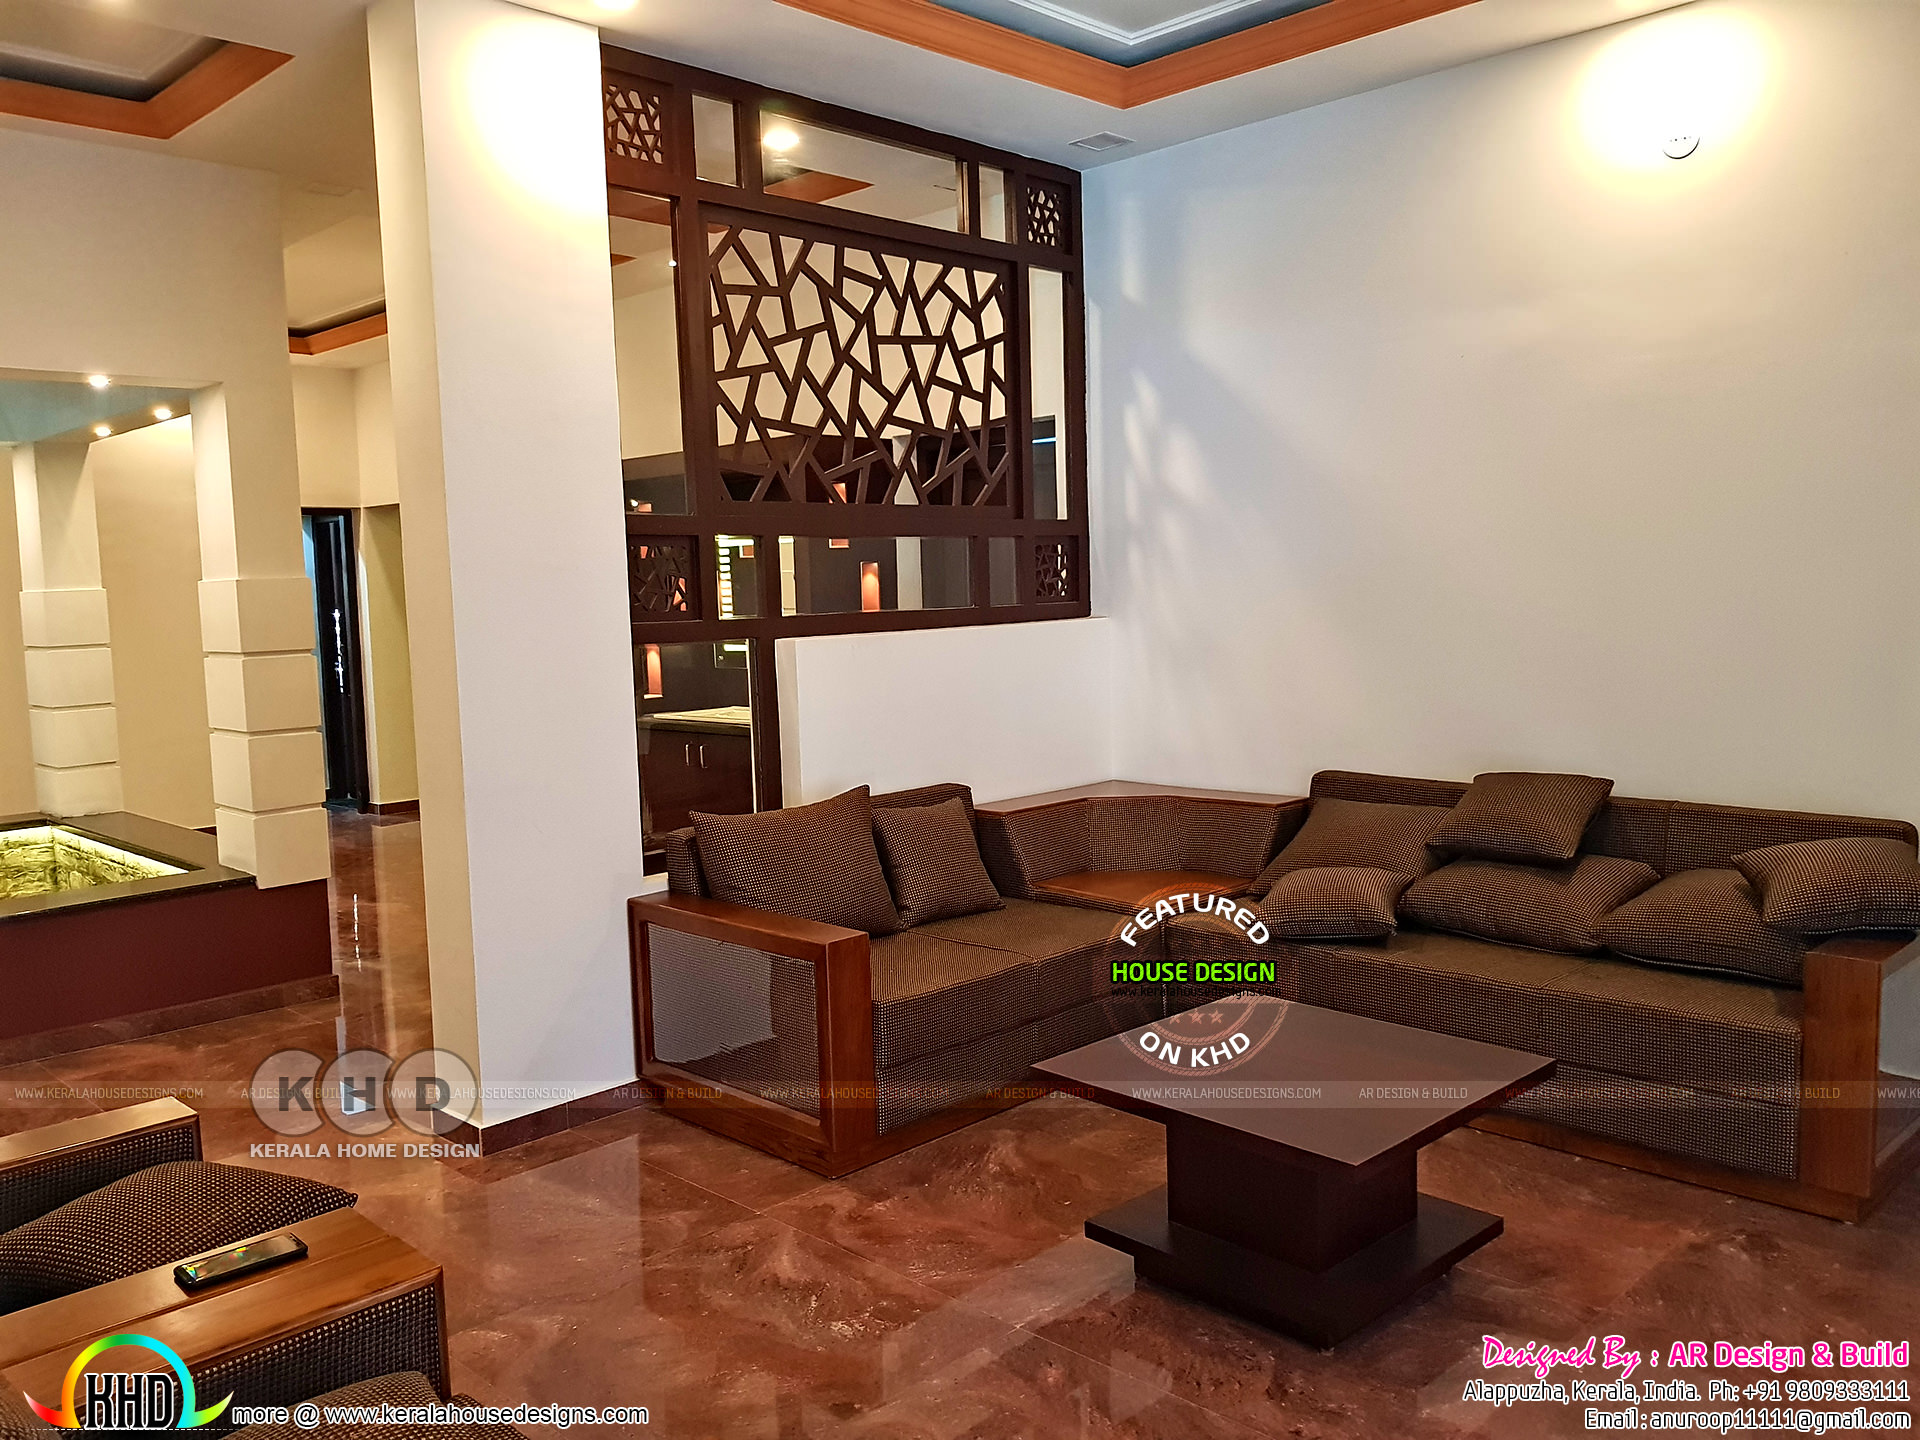 Furnished interior designs in Kerala Kerala home design